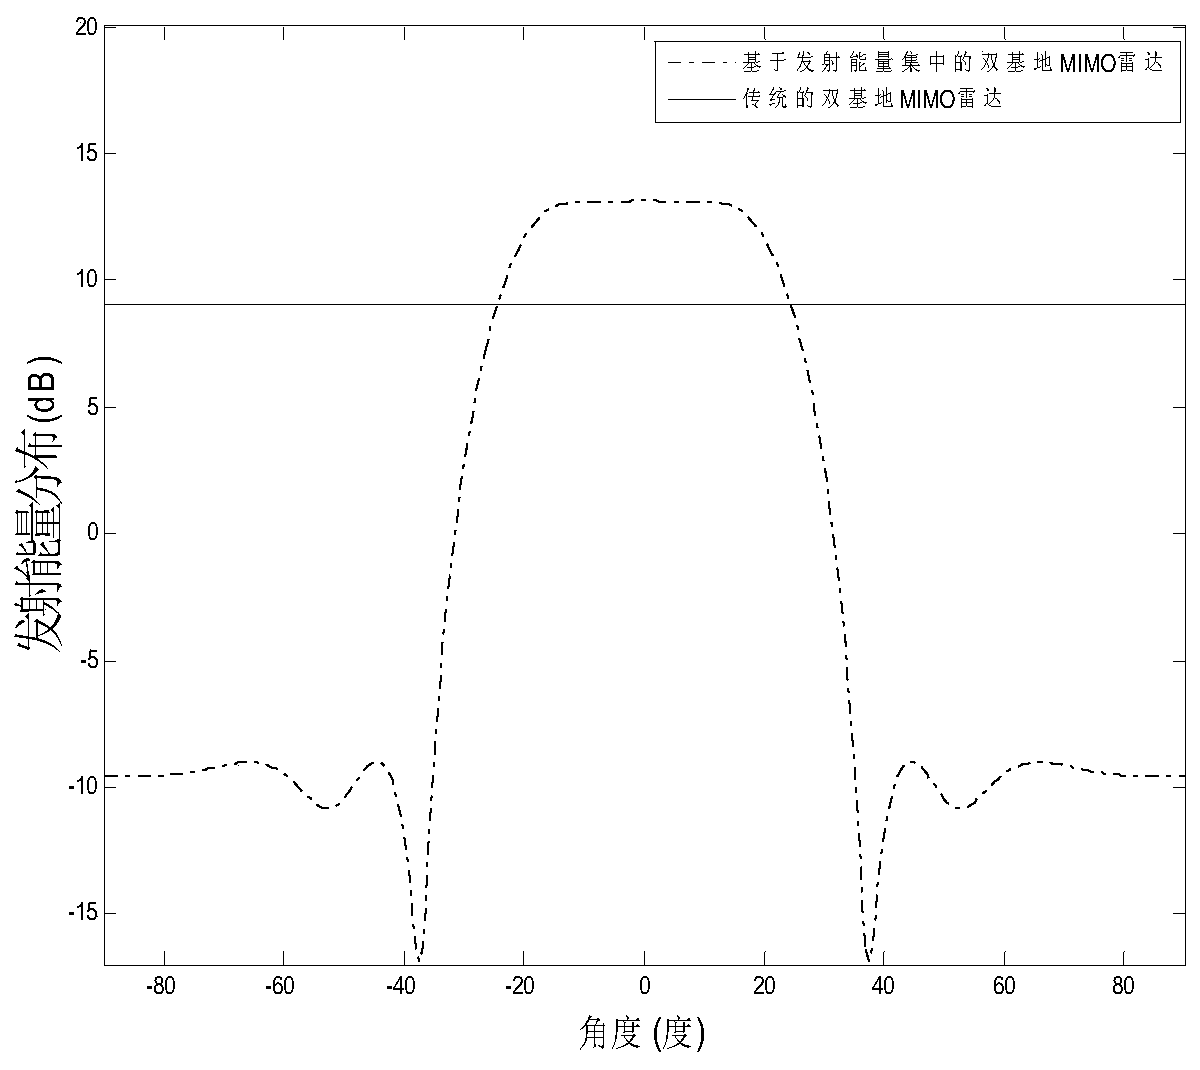 Bistatic MIMO radar angle estimation method based on emission energy concentration